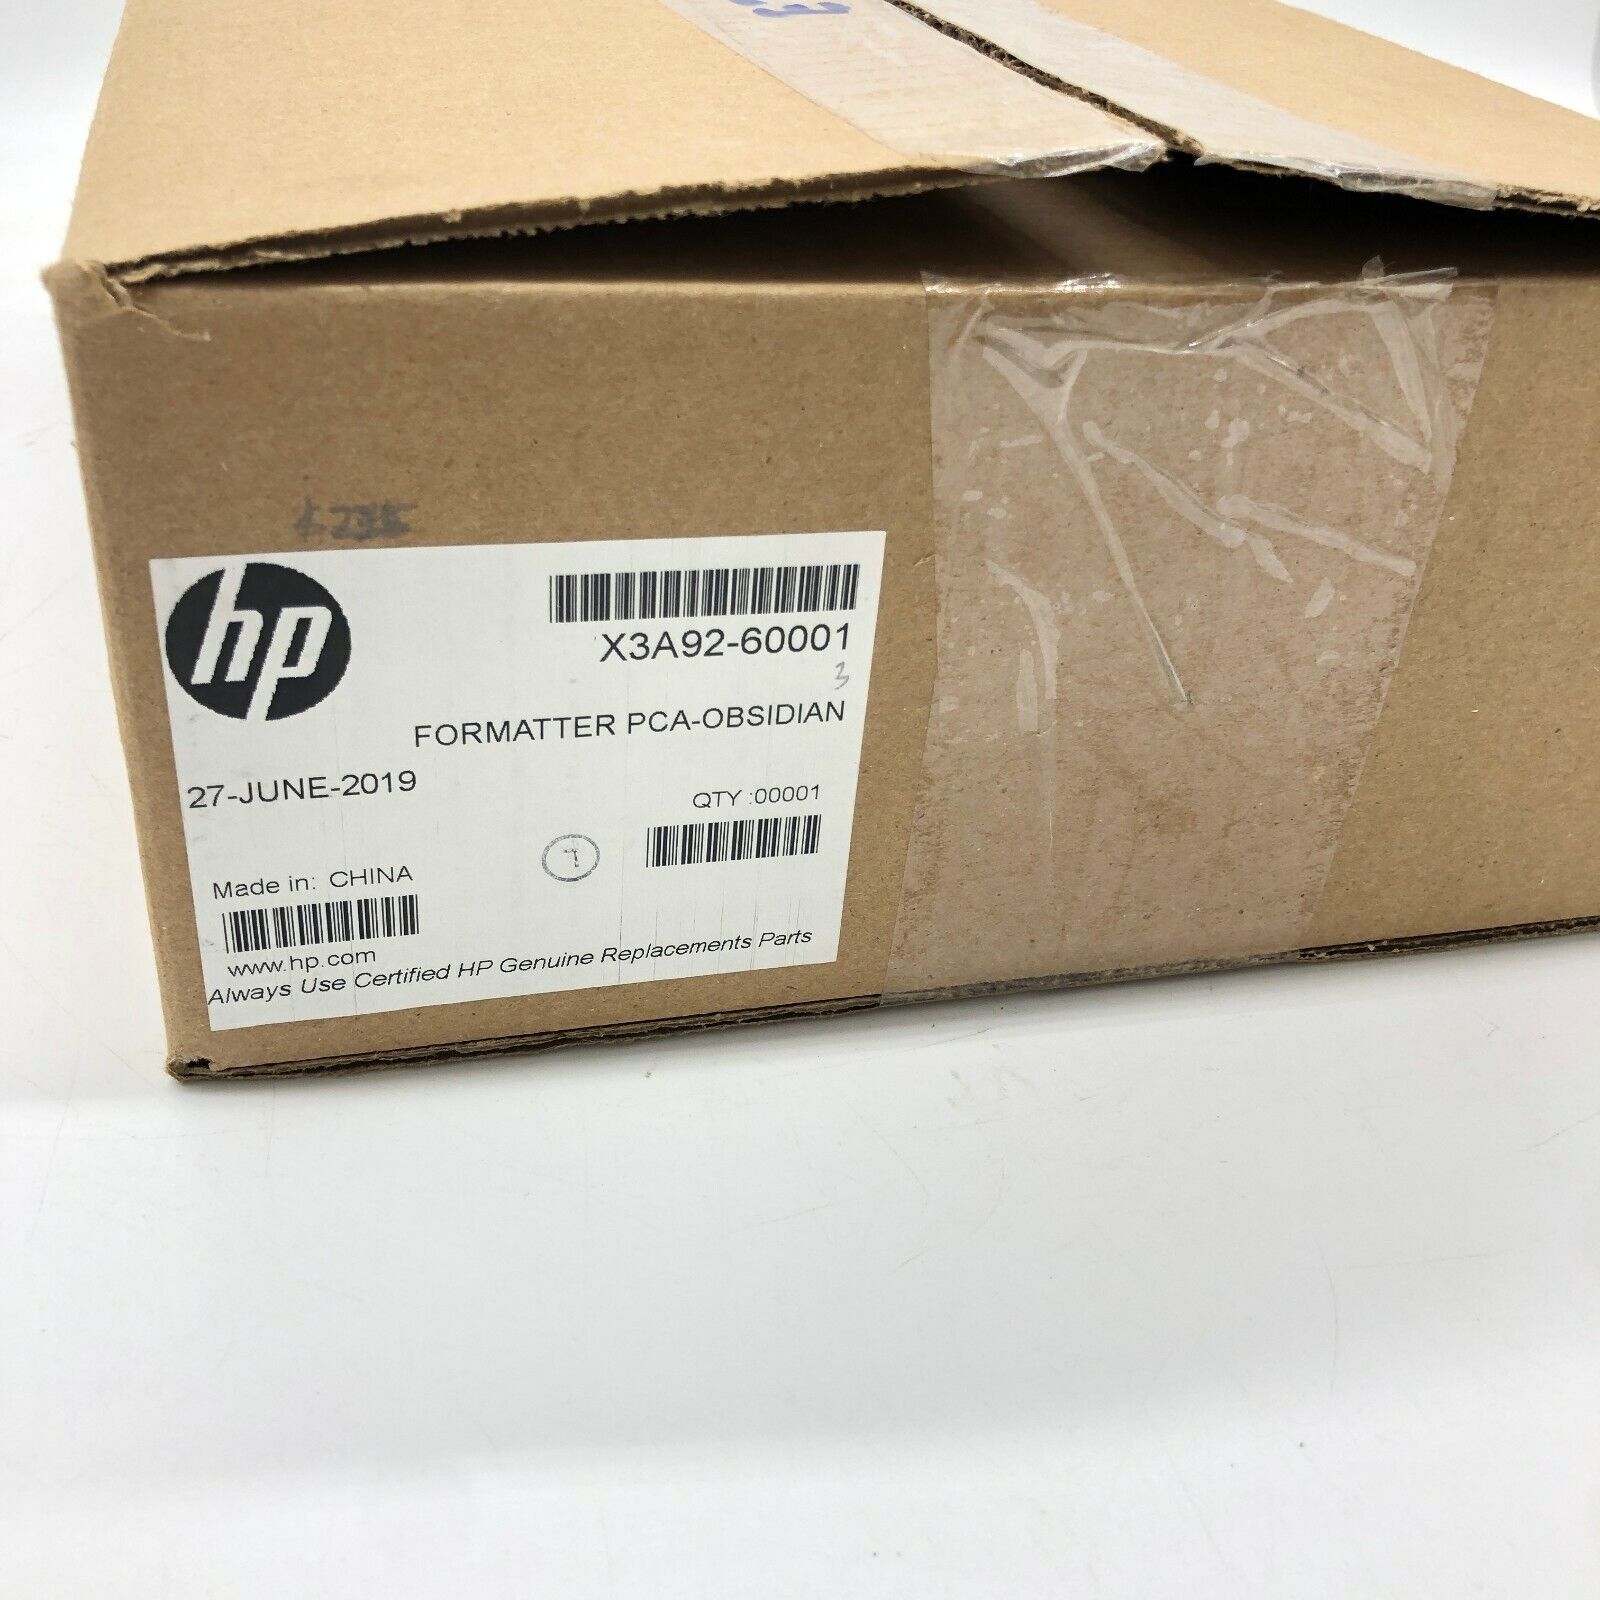 HP PCA-Formatter